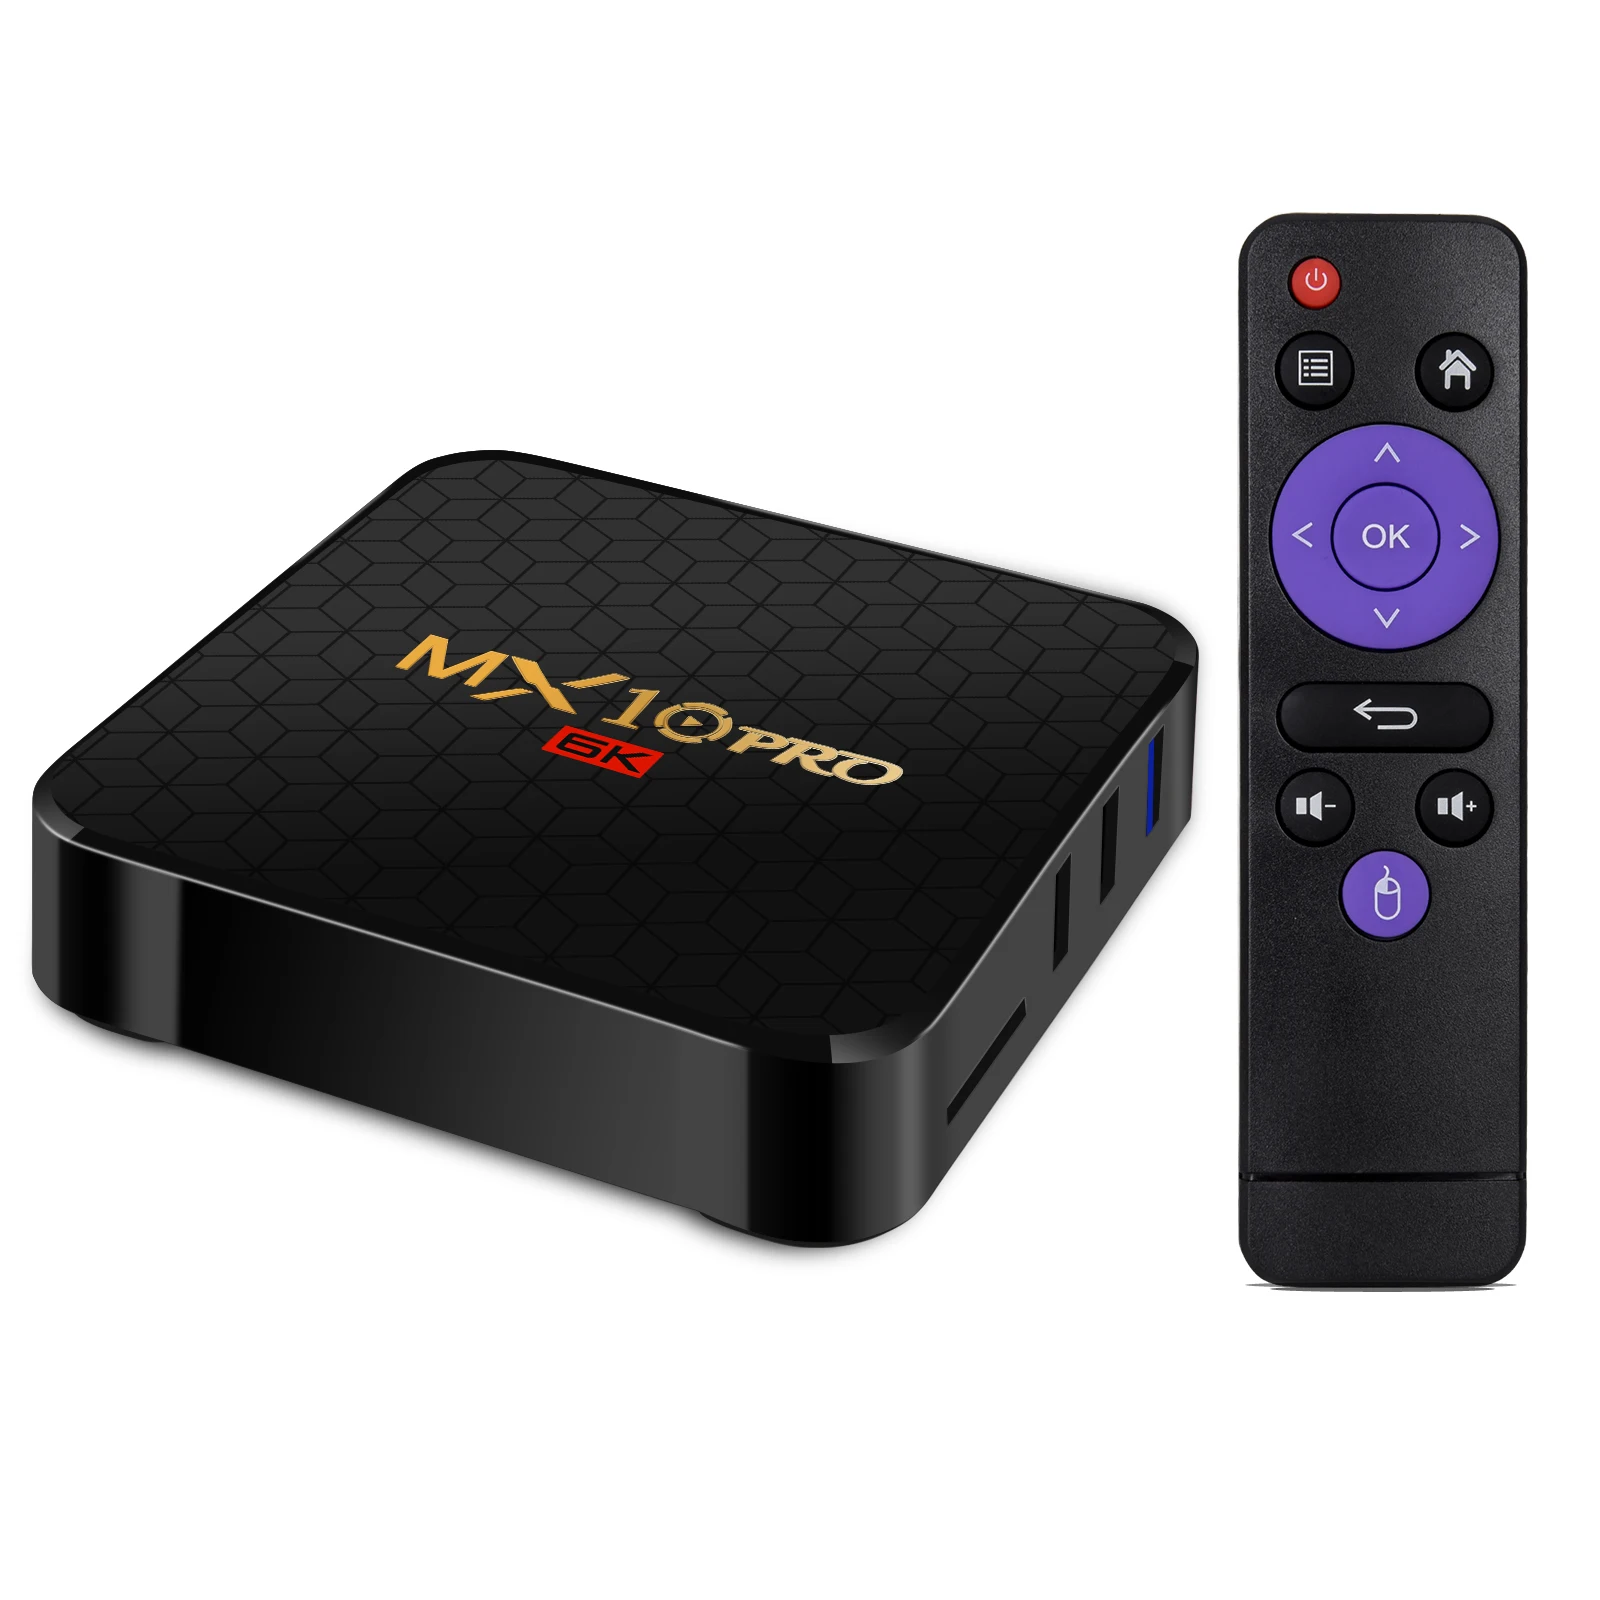 Good quality Quad Core TV Box MX10 Pro H6 4G RAM 64G ROM Android9.0 MX 10 Pro Media Player Smart TV Box